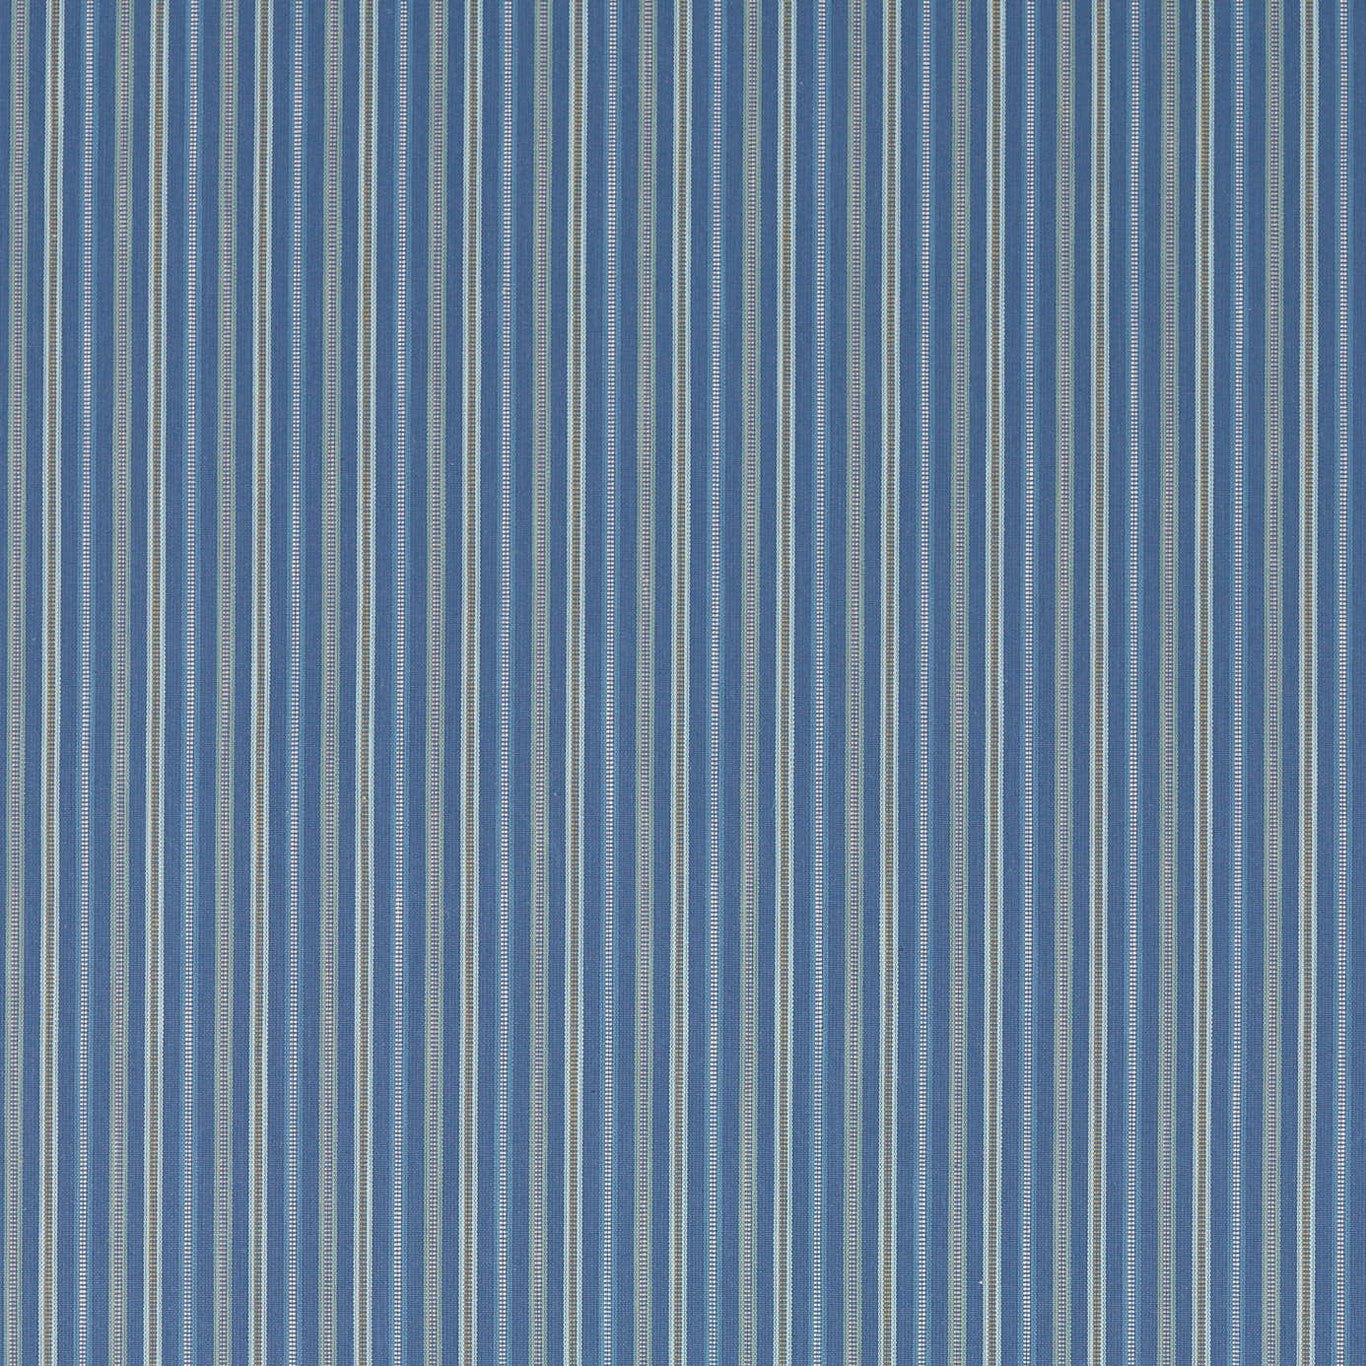 Melford Stripe Marine Fabric by SAN